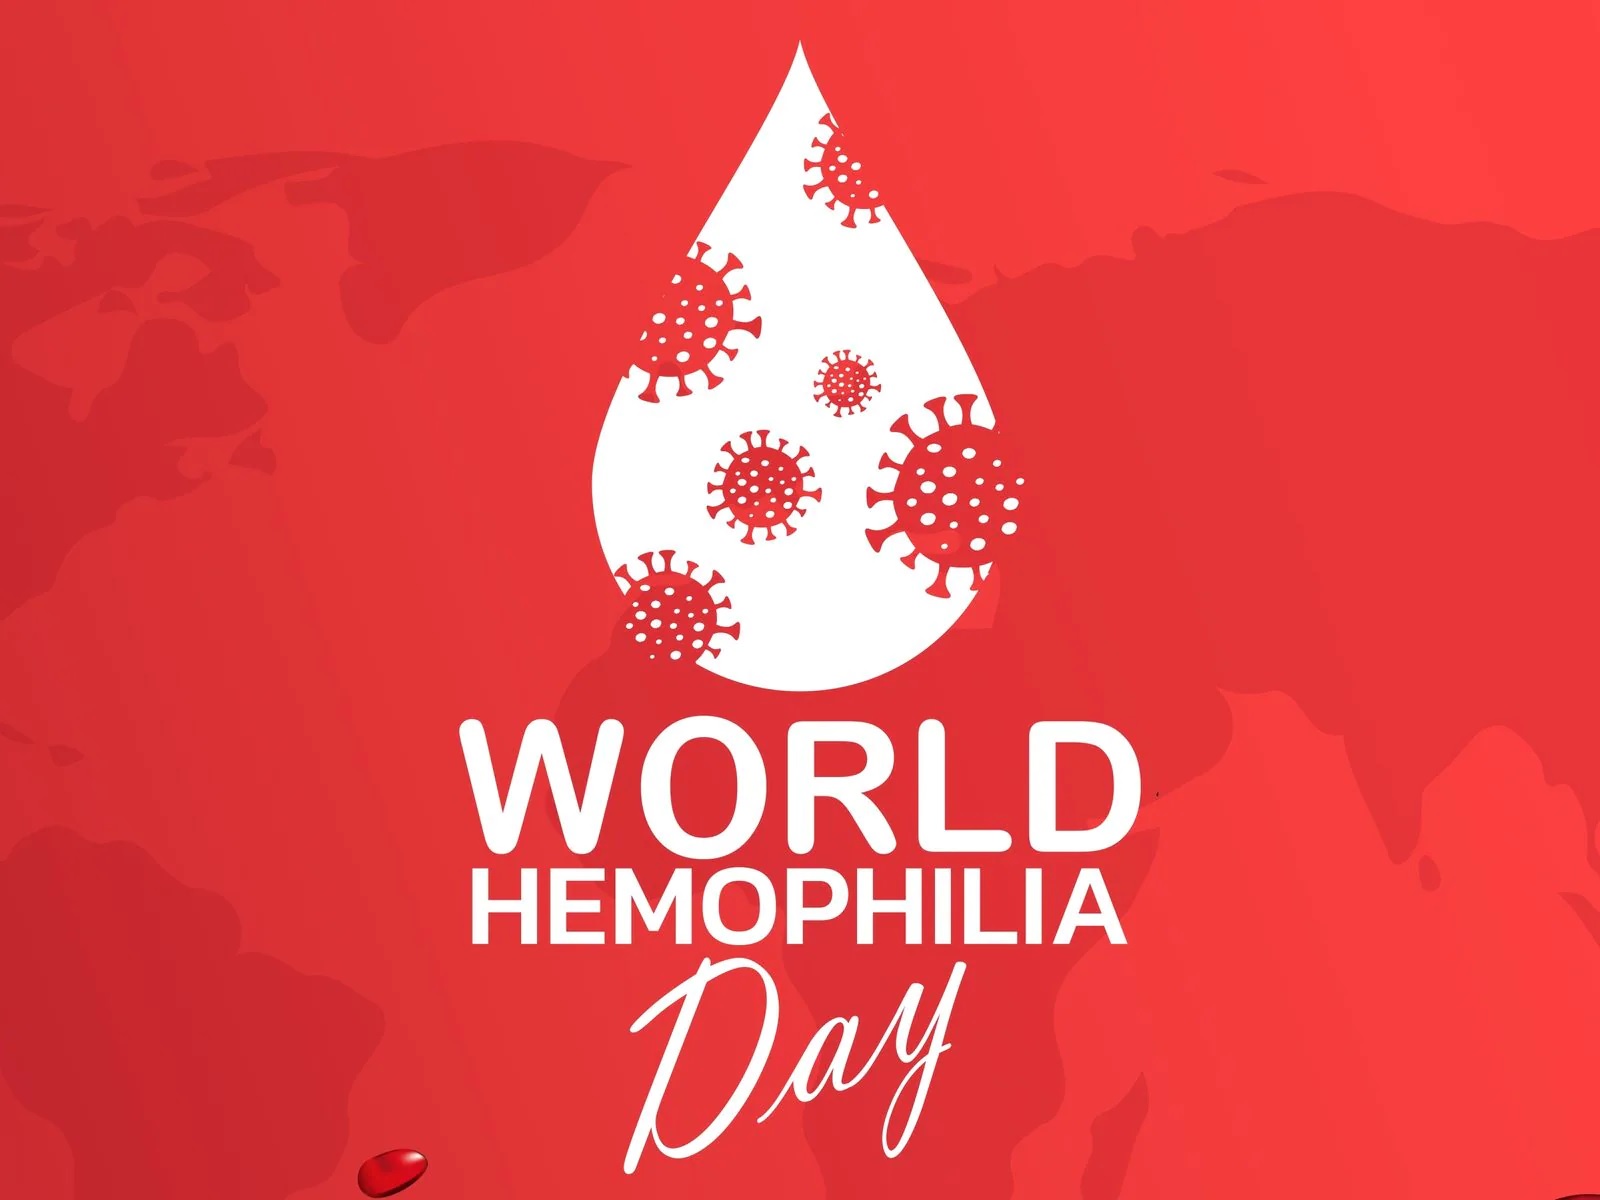 WORLD HEMOPHILIA DAY IN TAMIL 2